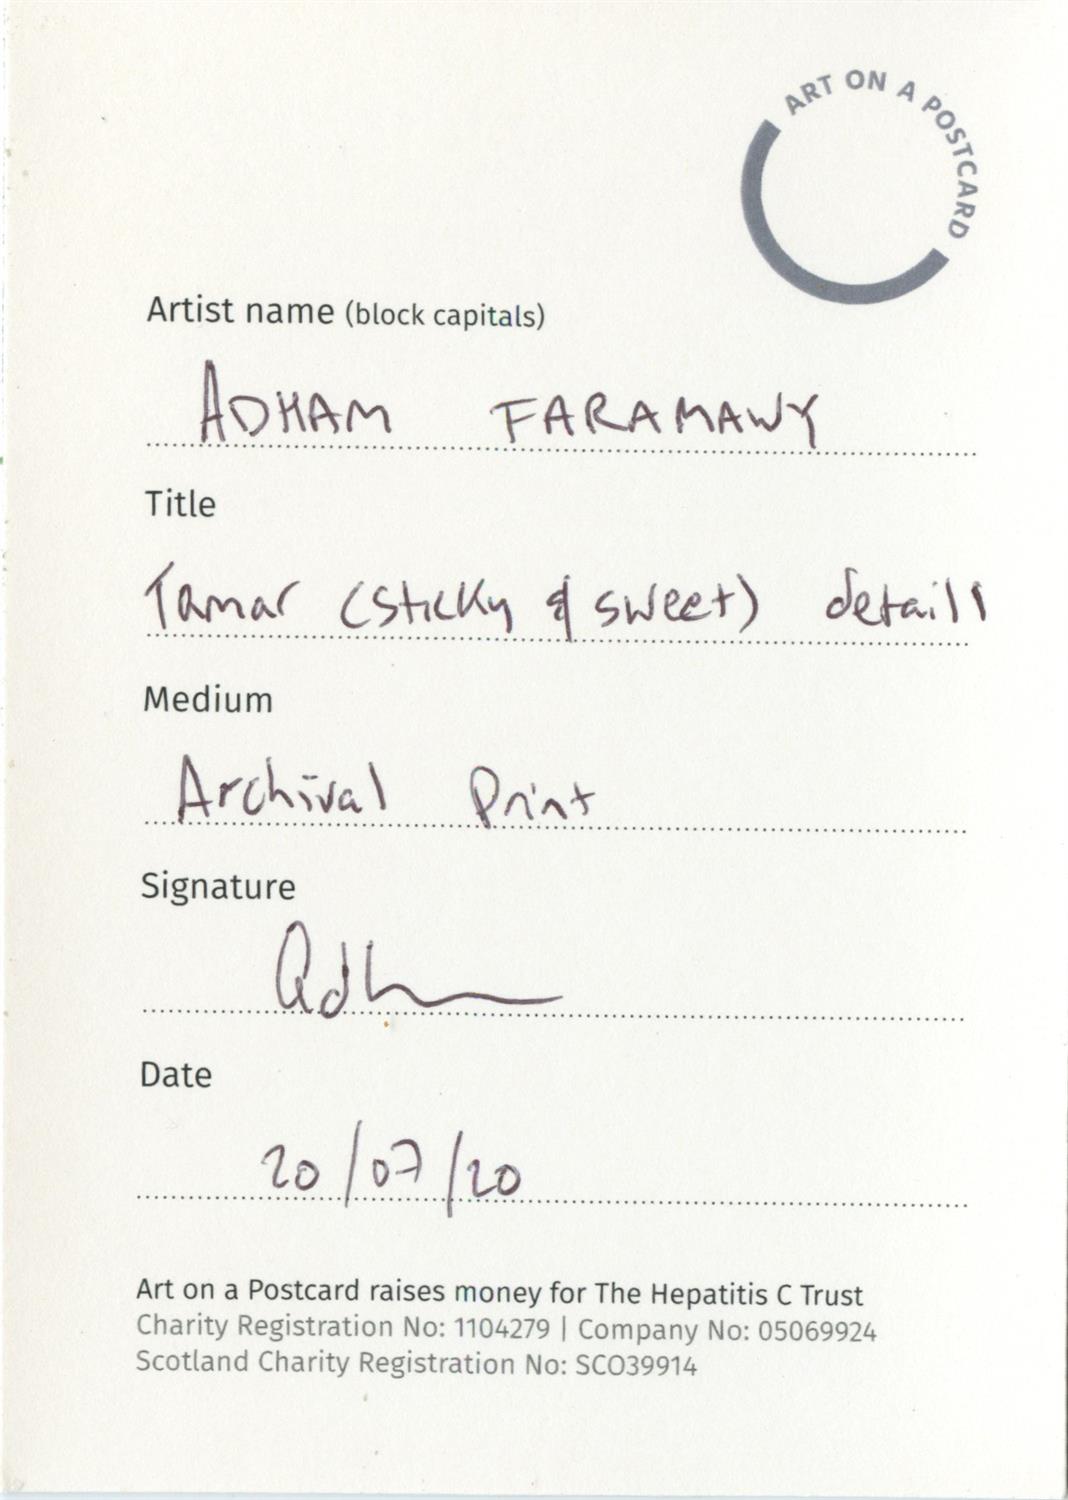 Adham Faramawy, Tamar (Sticky & Sweet) Detail 1, 2020 - Image 2 of 3